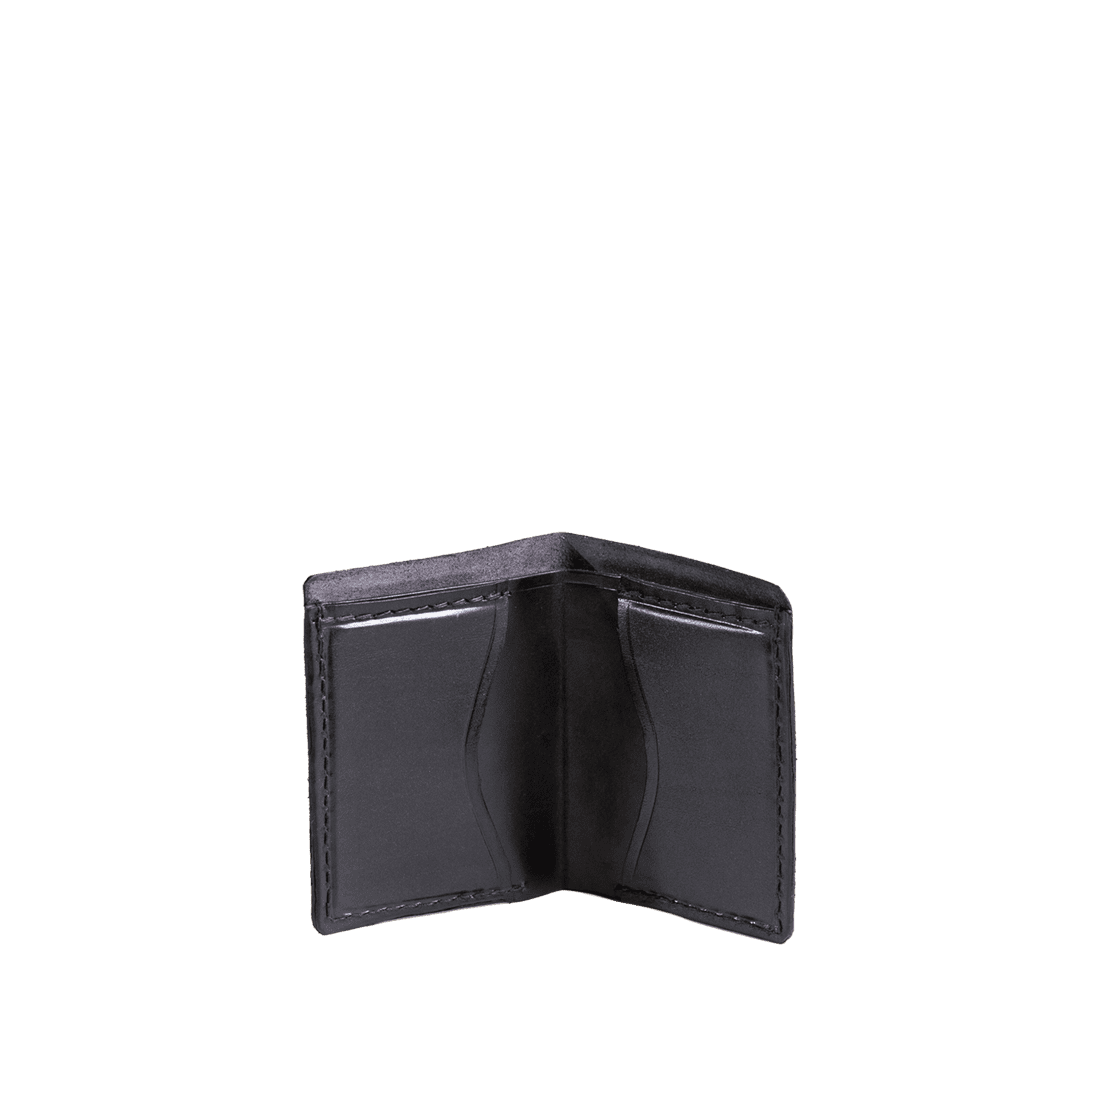 Leather Deluxe card holder in Italian soft hide matt black colour, an handmade accessory by Mackenzie Leather Edinburgh.